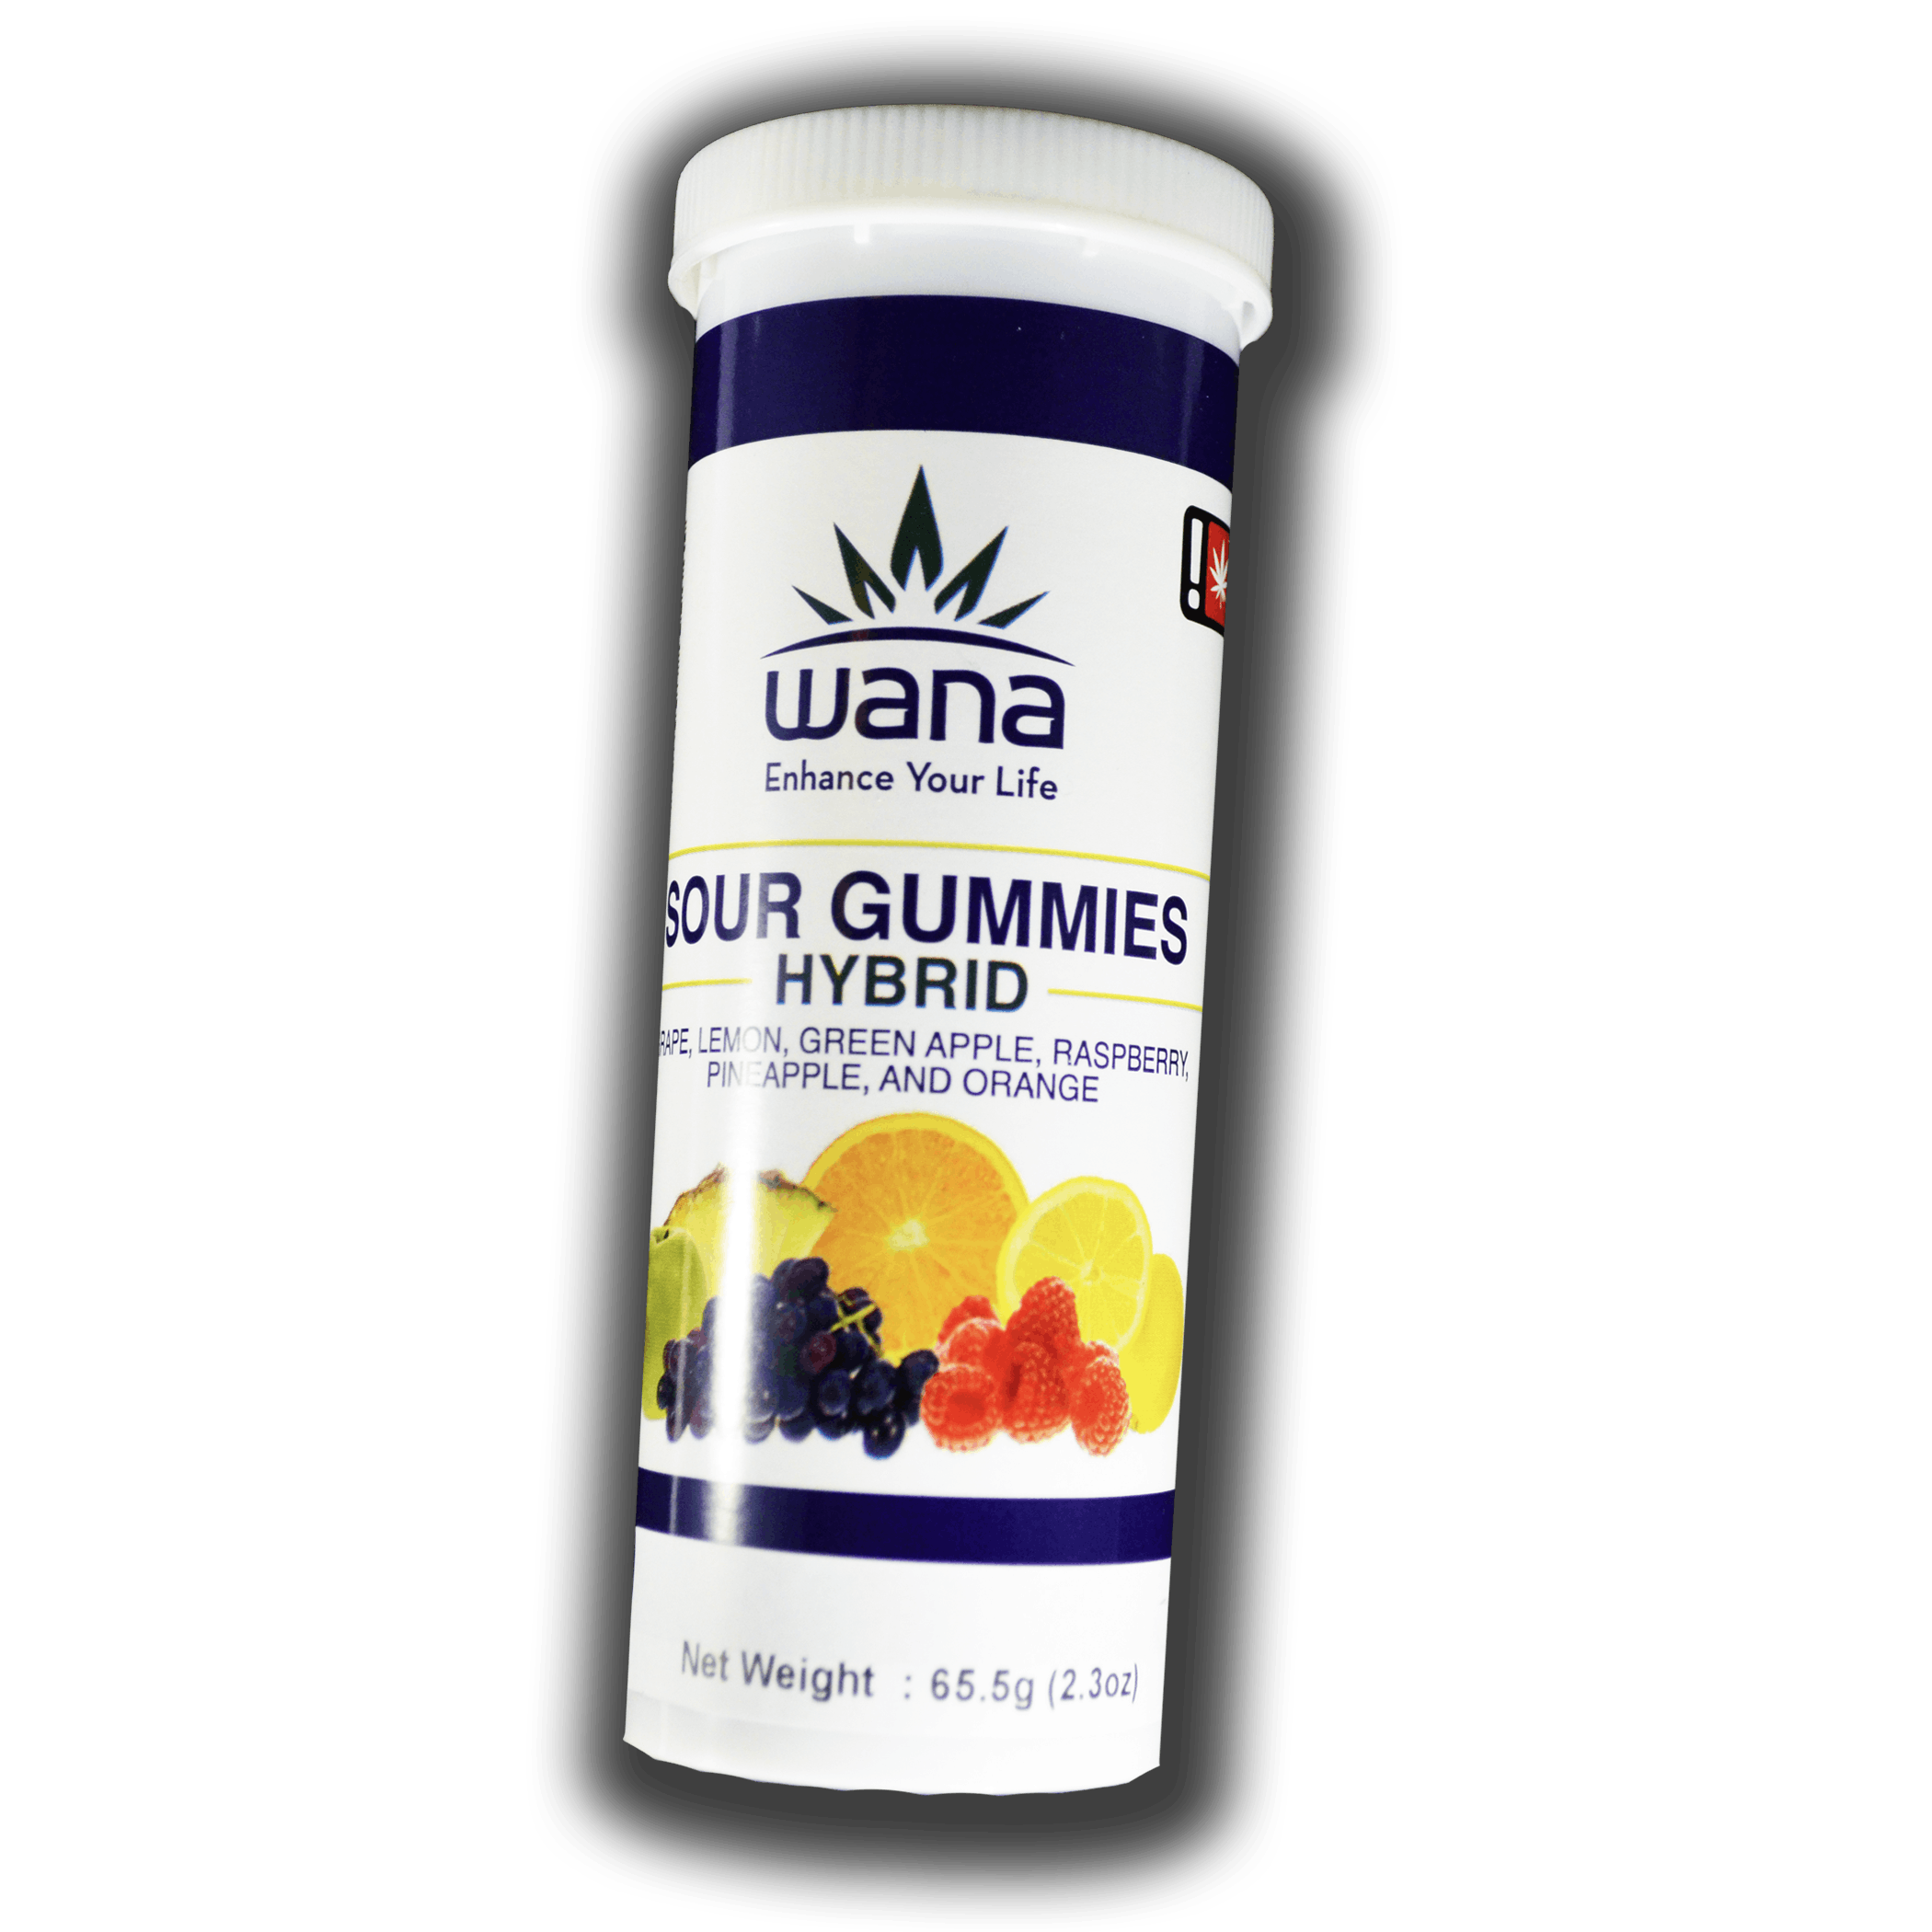 Adult Use - Wana: Hybrid Sour Gummies